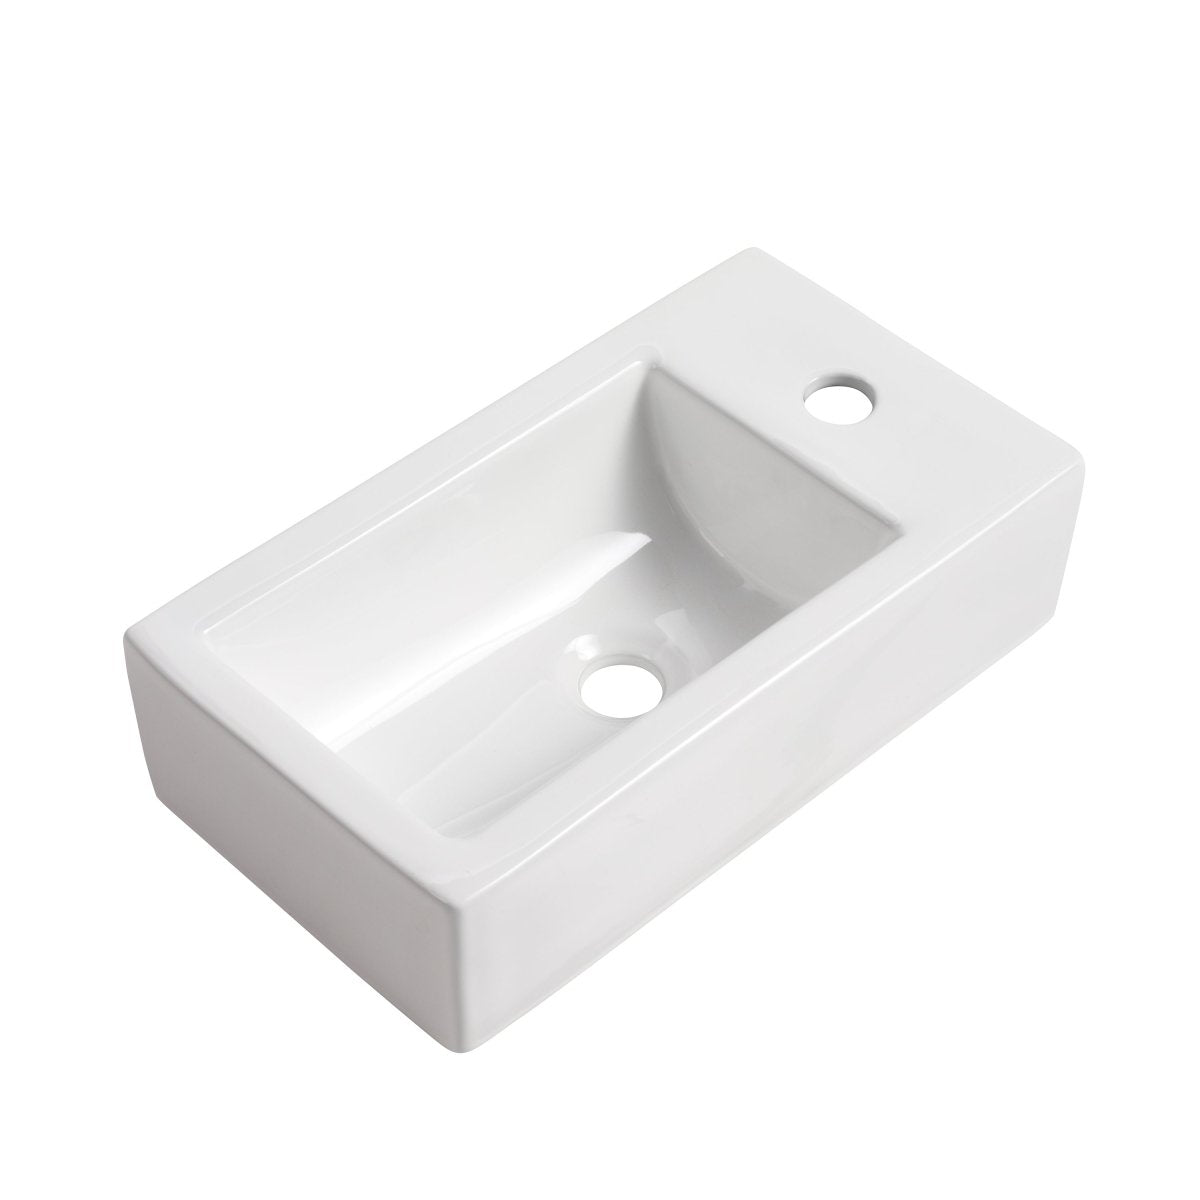 ExBrite Bathroom Vanity 18" With Single Sink For Small Bathroom